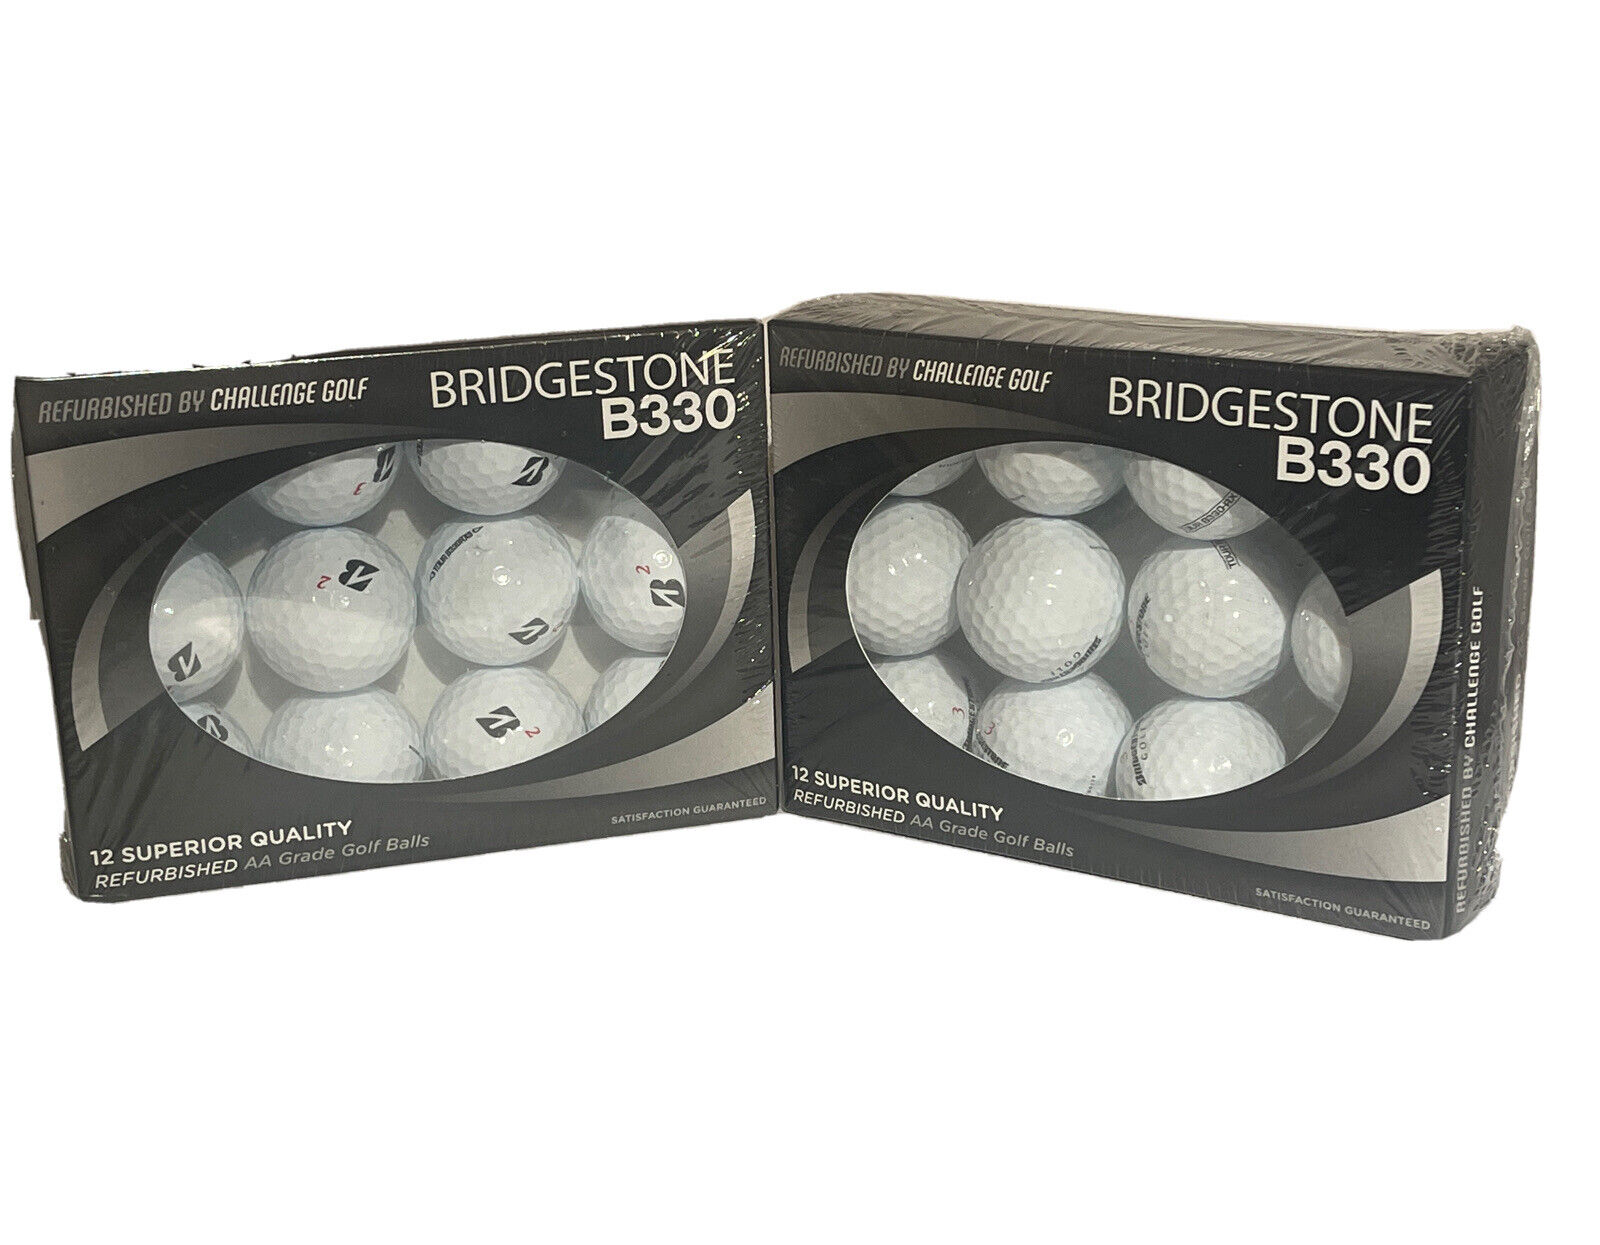 Bridgestone B330 12 Superior Quality Refurbished AA Grade Golf Balls-2 Boxes